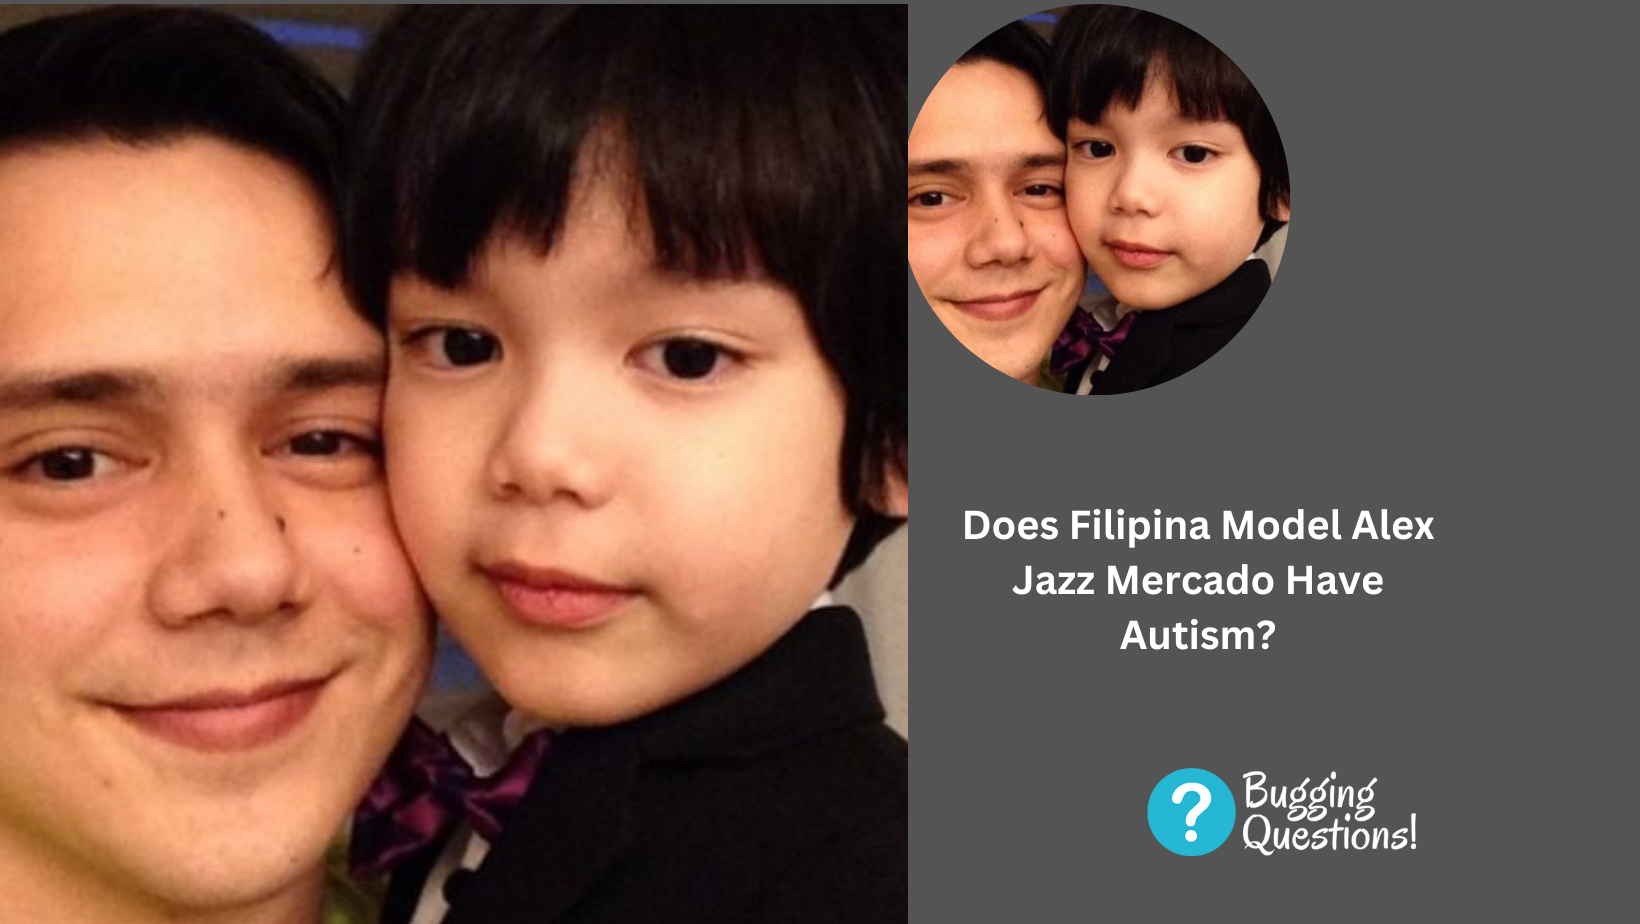 Does Filipina Model Alex Jazz Mercado Have Autism?